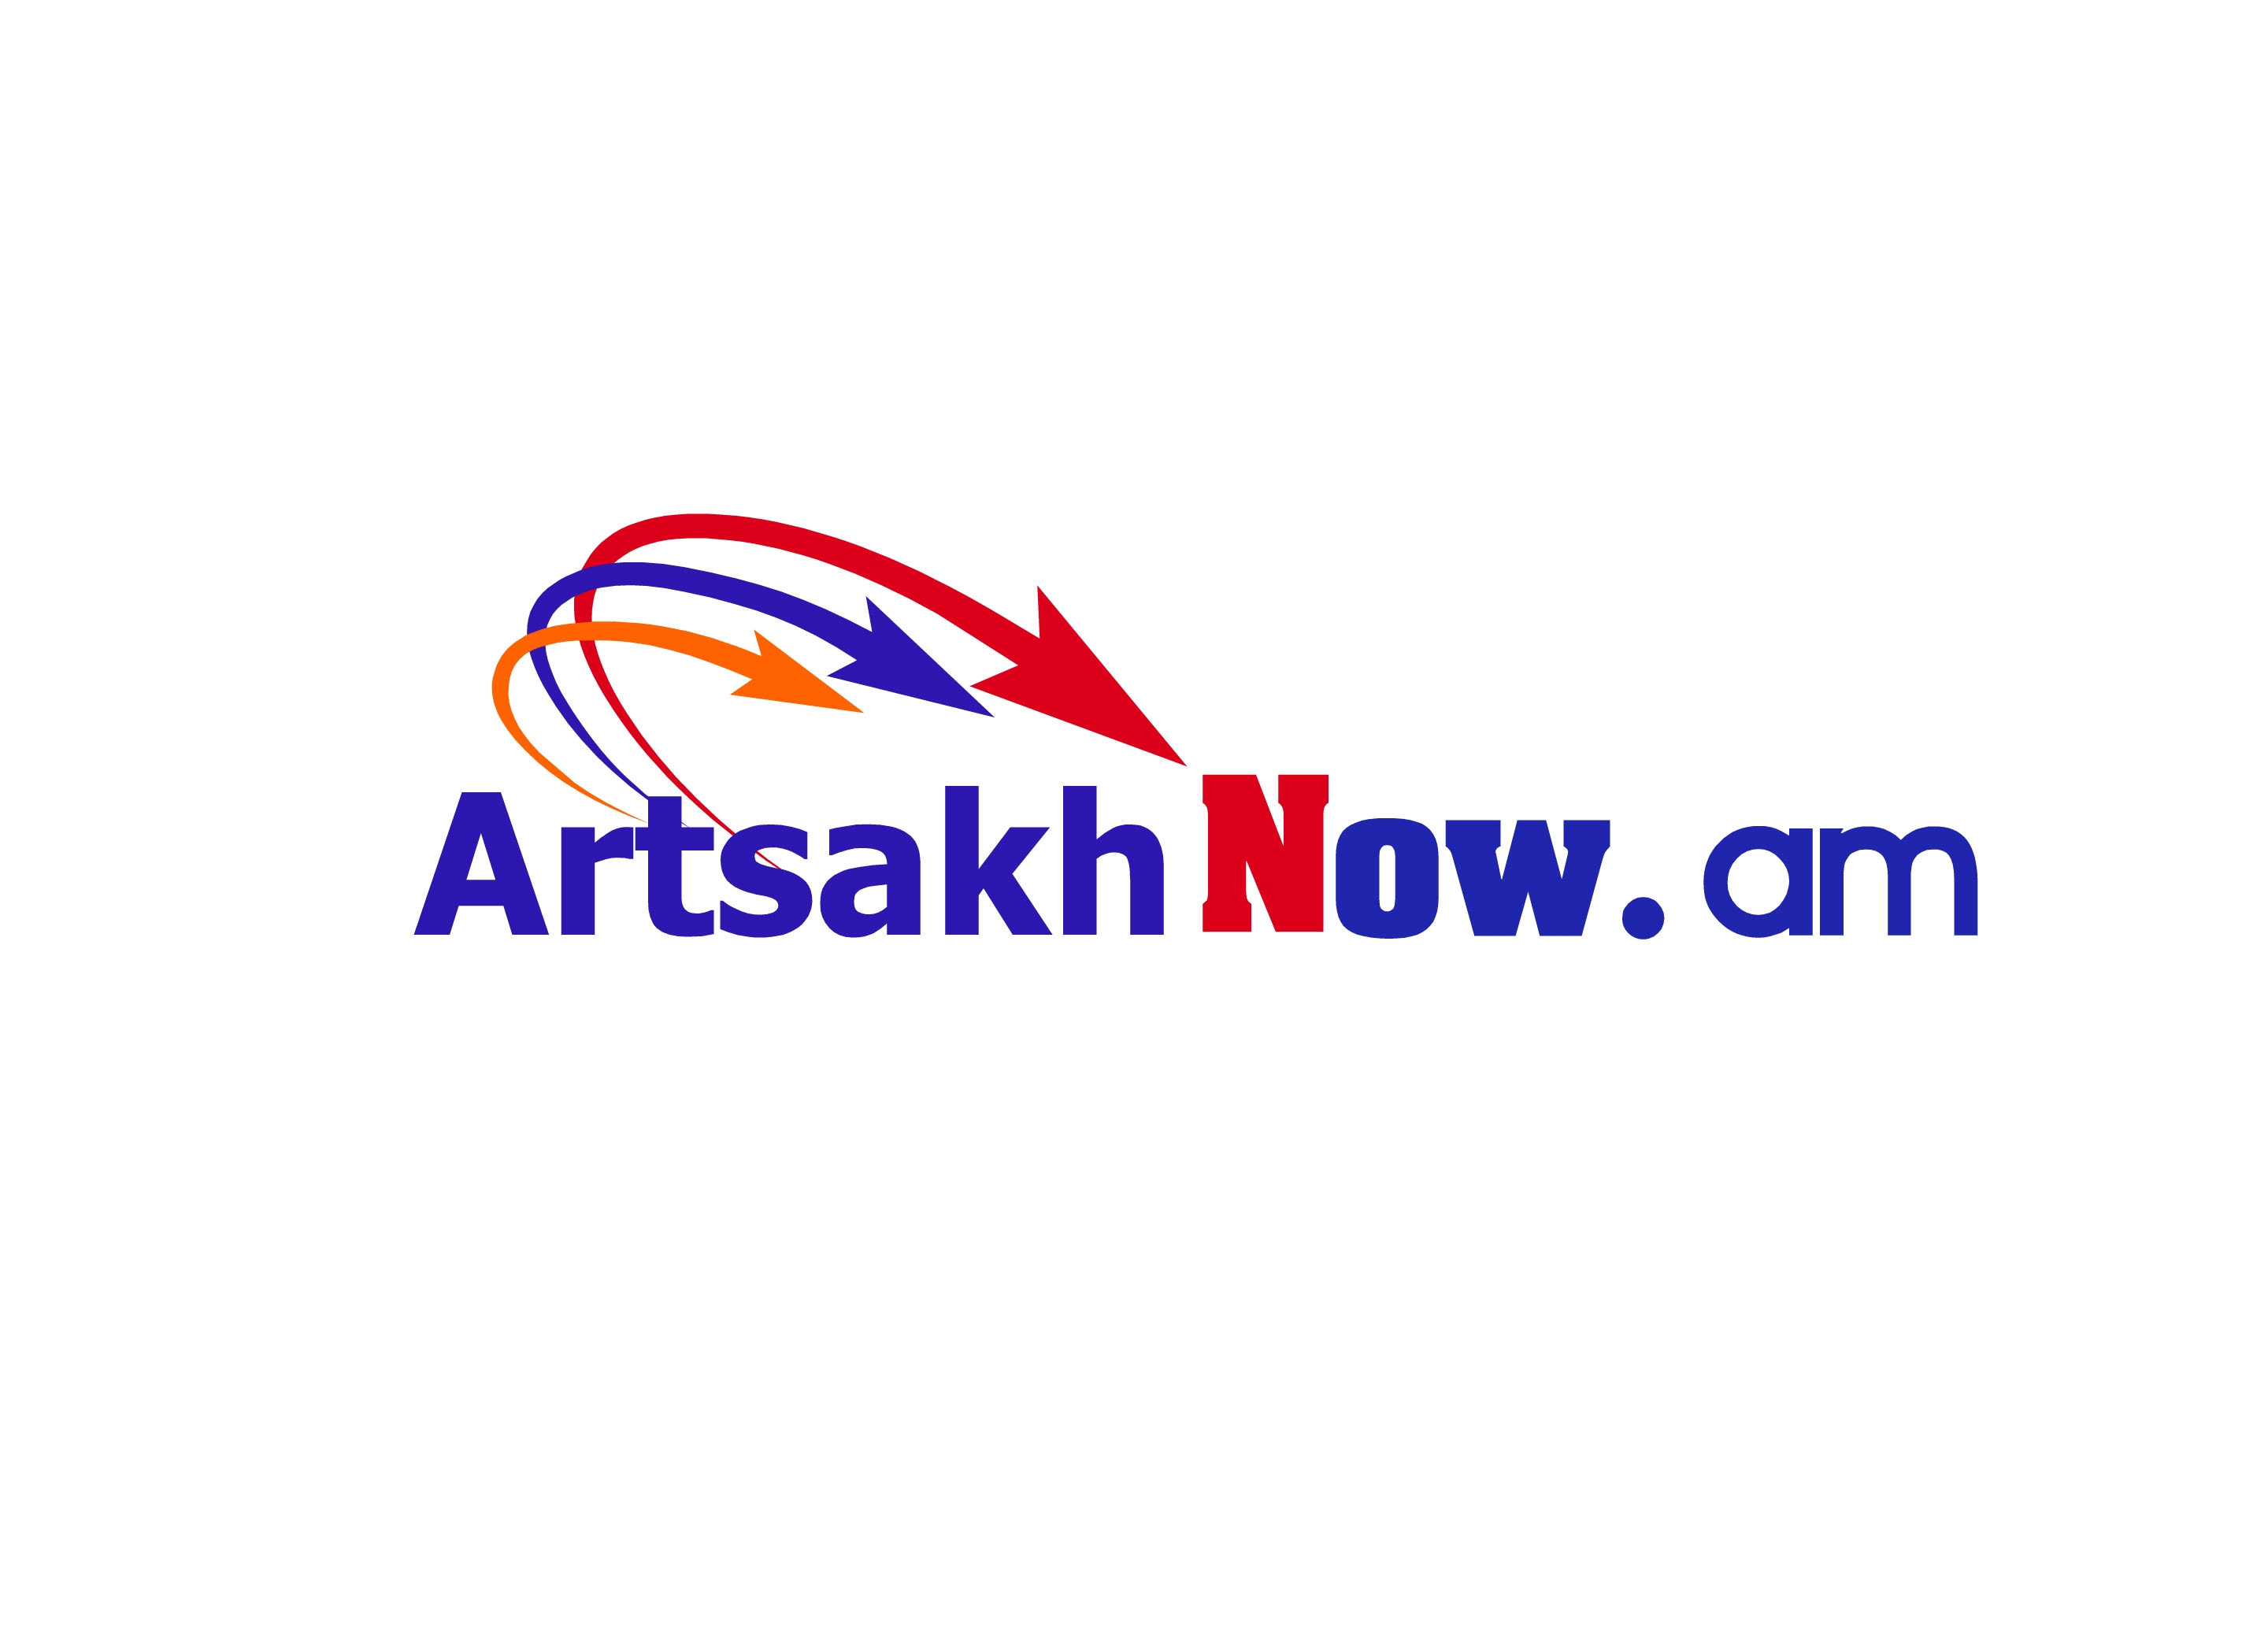 Artsakhnow.am — альтернативное мнение из Арцаха 